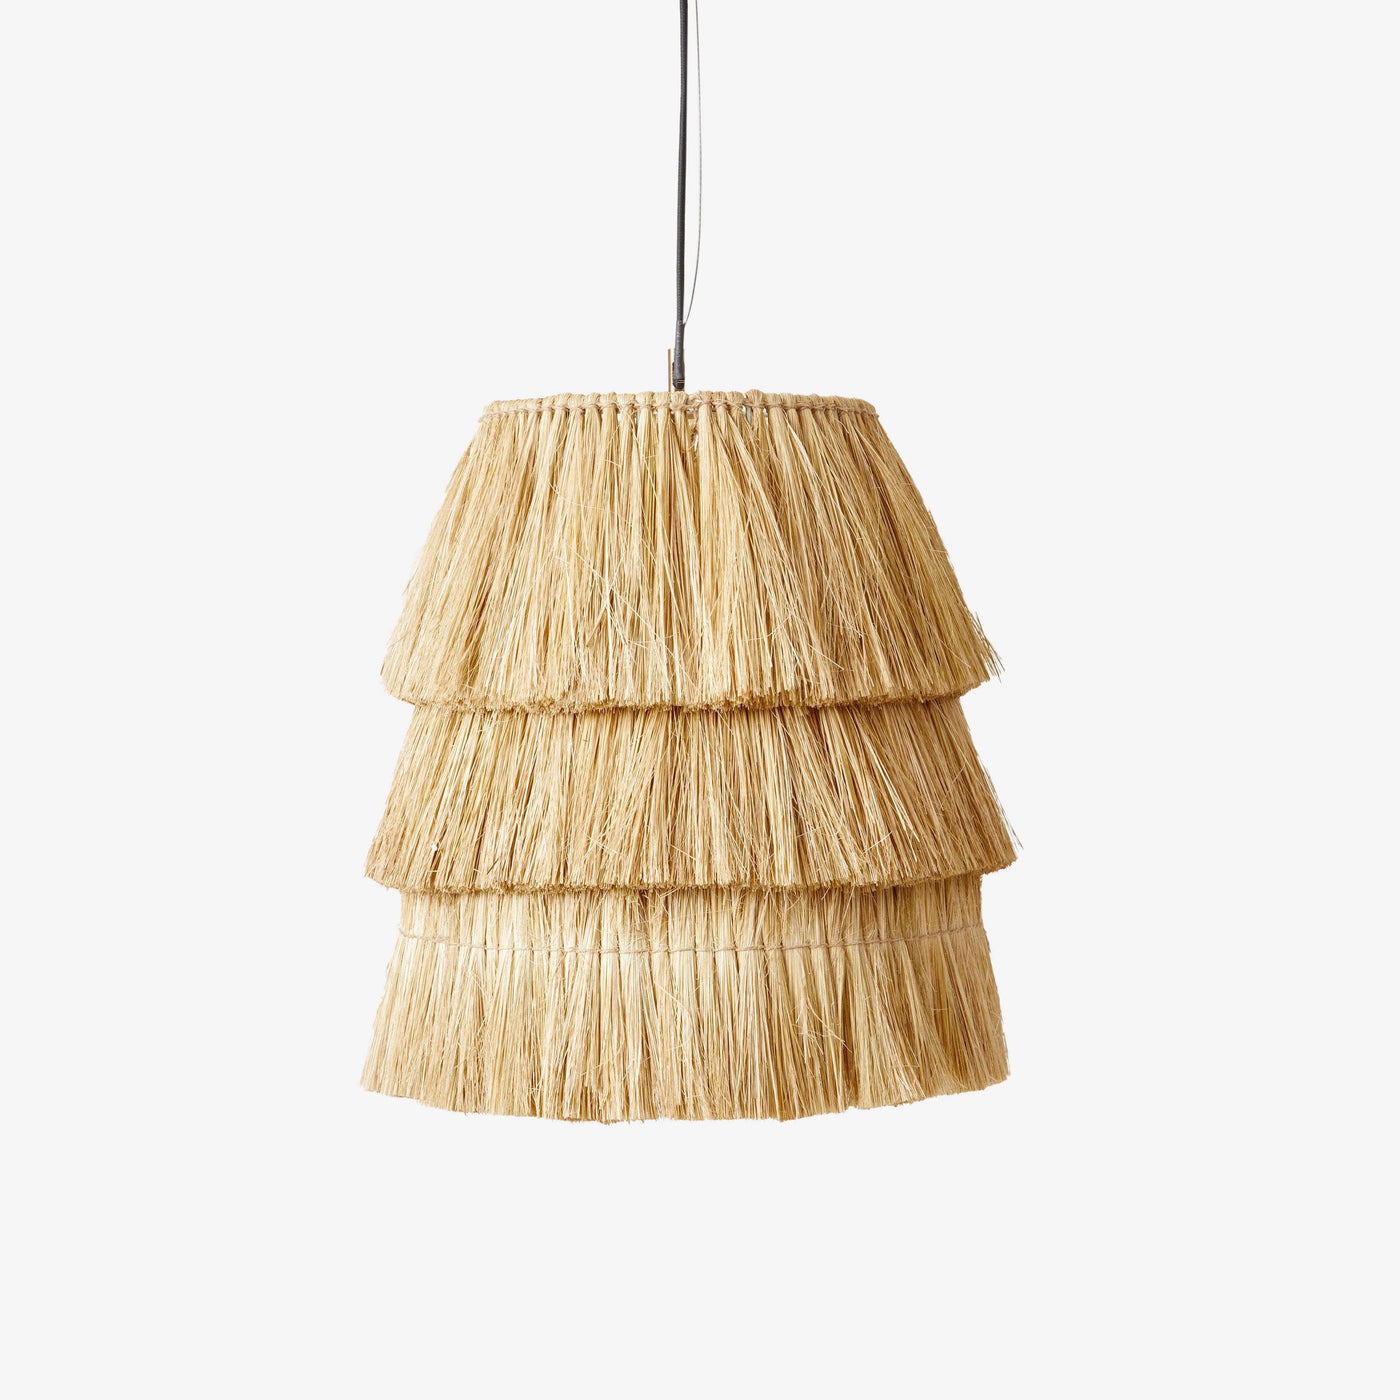 Foonse Pendant Lamp, Natural Ceiling Lighting sazy.com